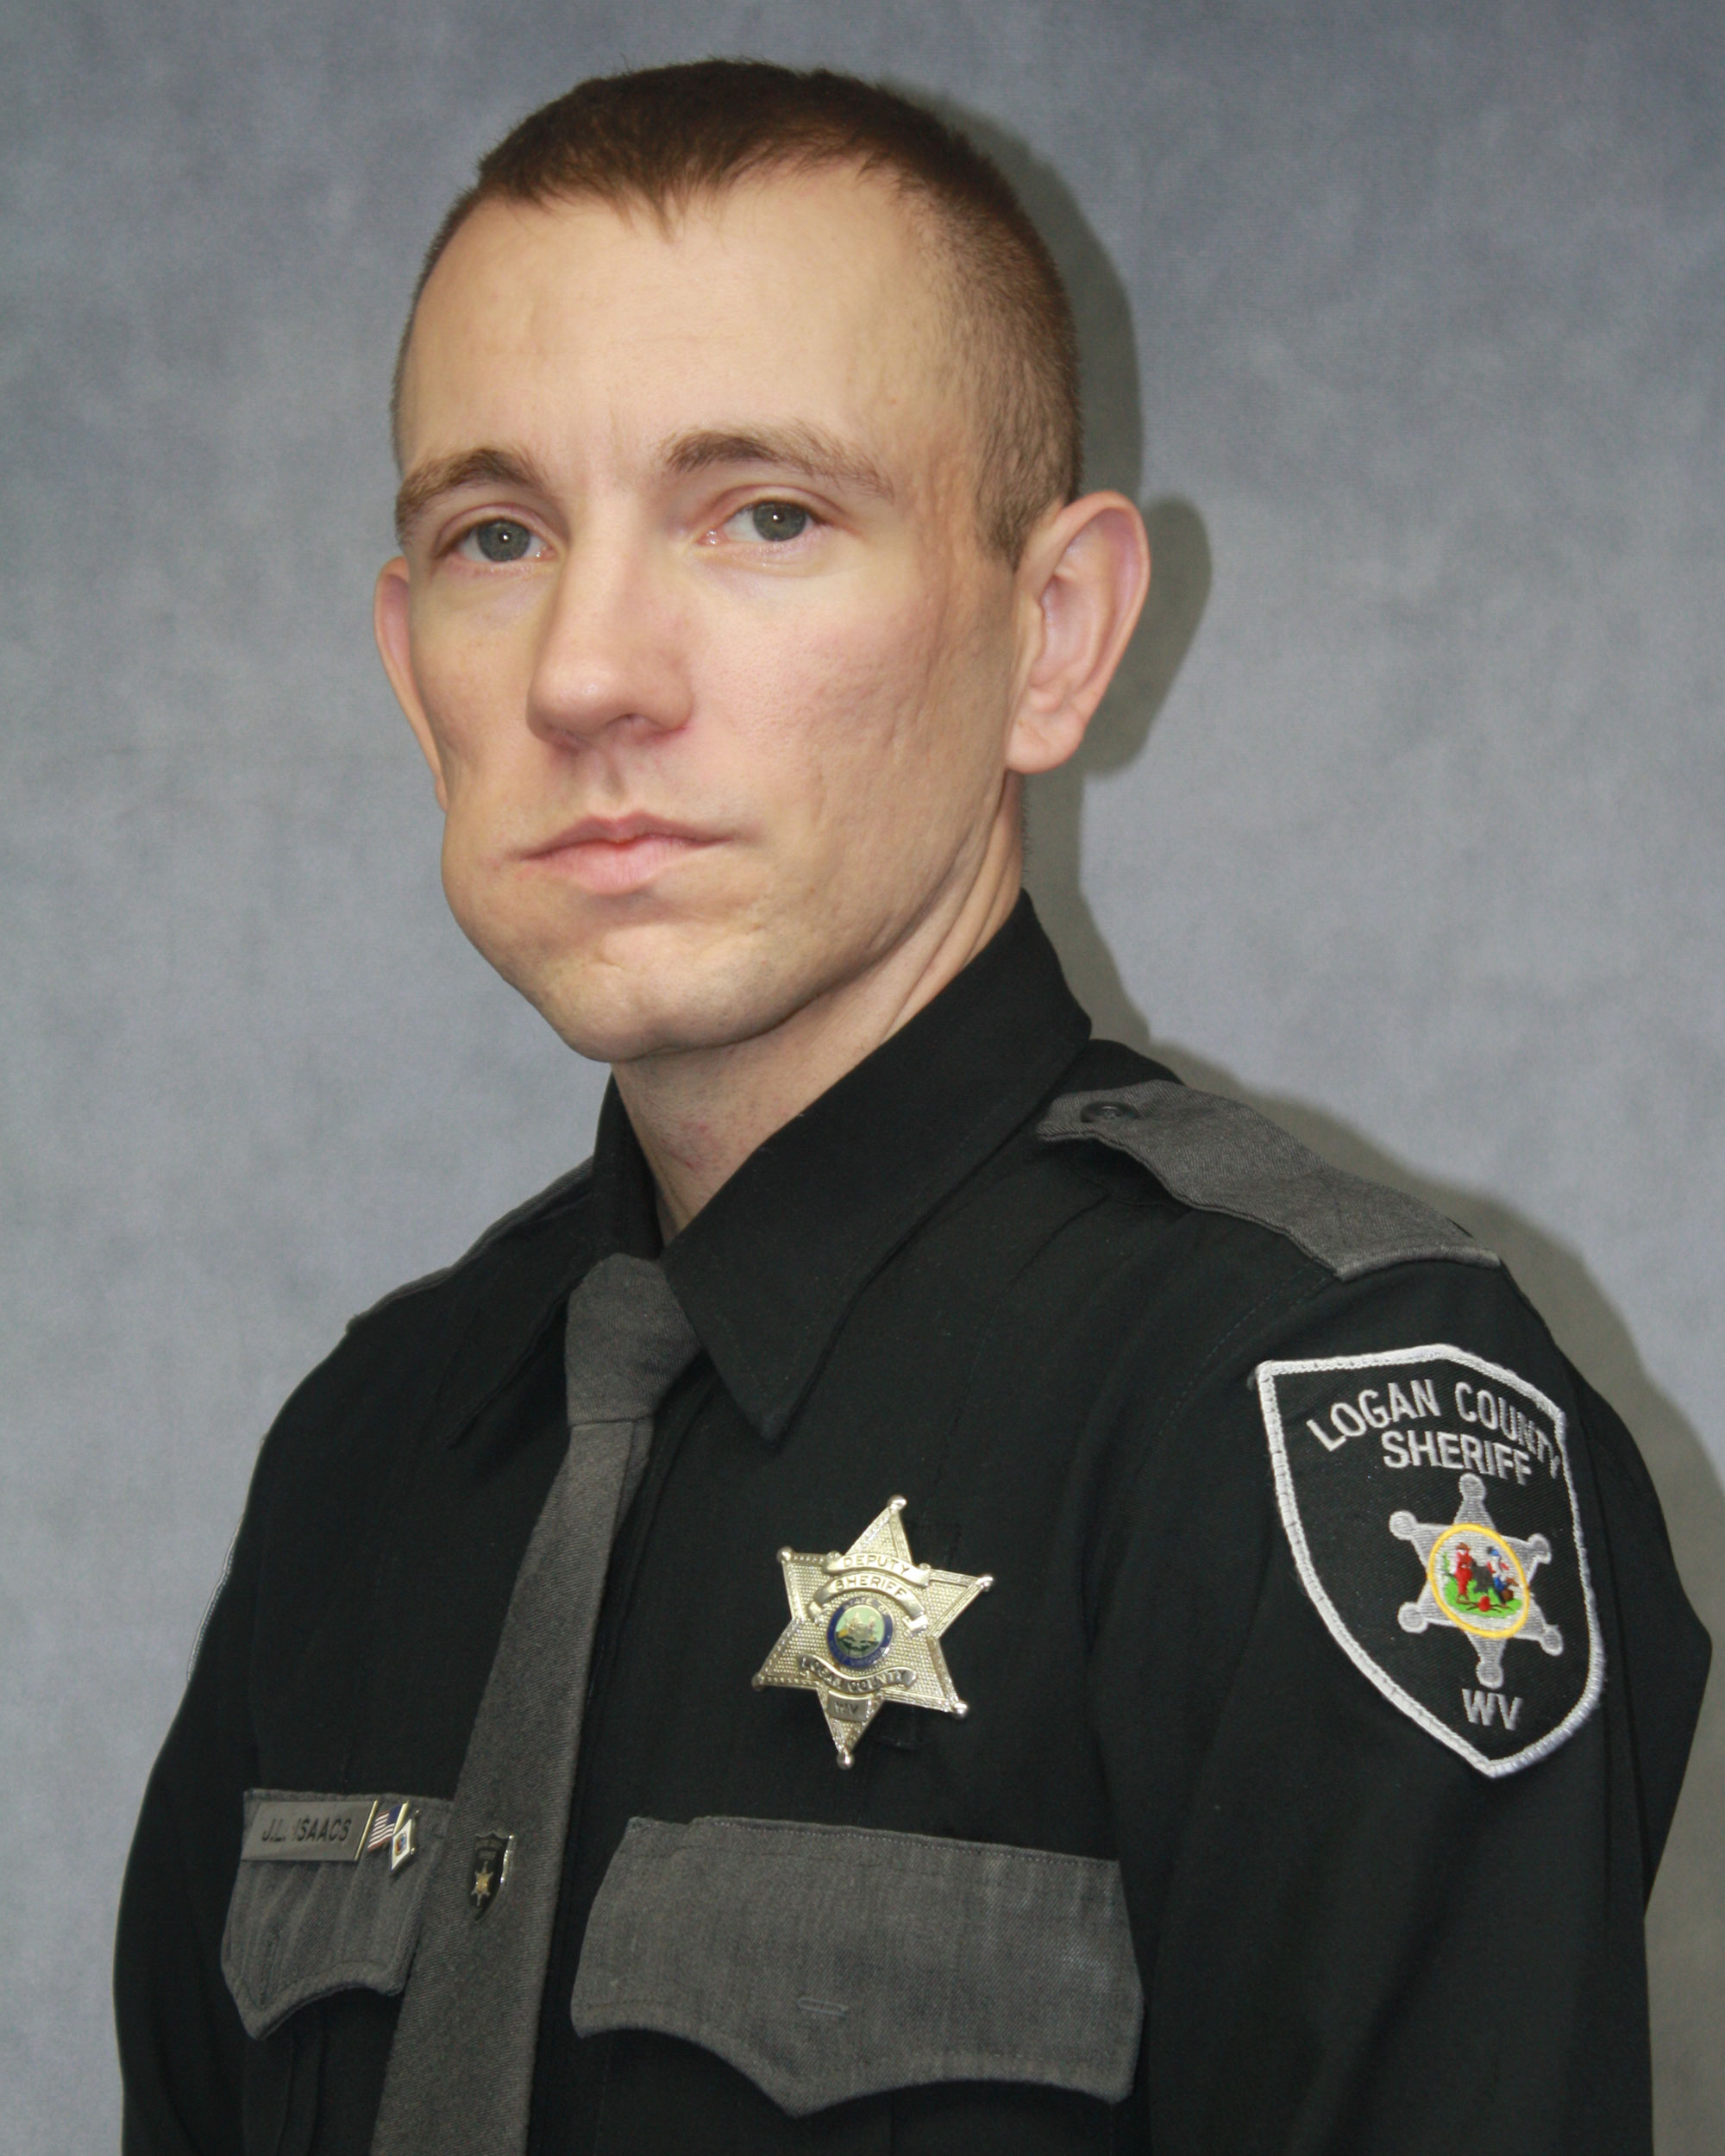 Deputy J.L. Isaacs